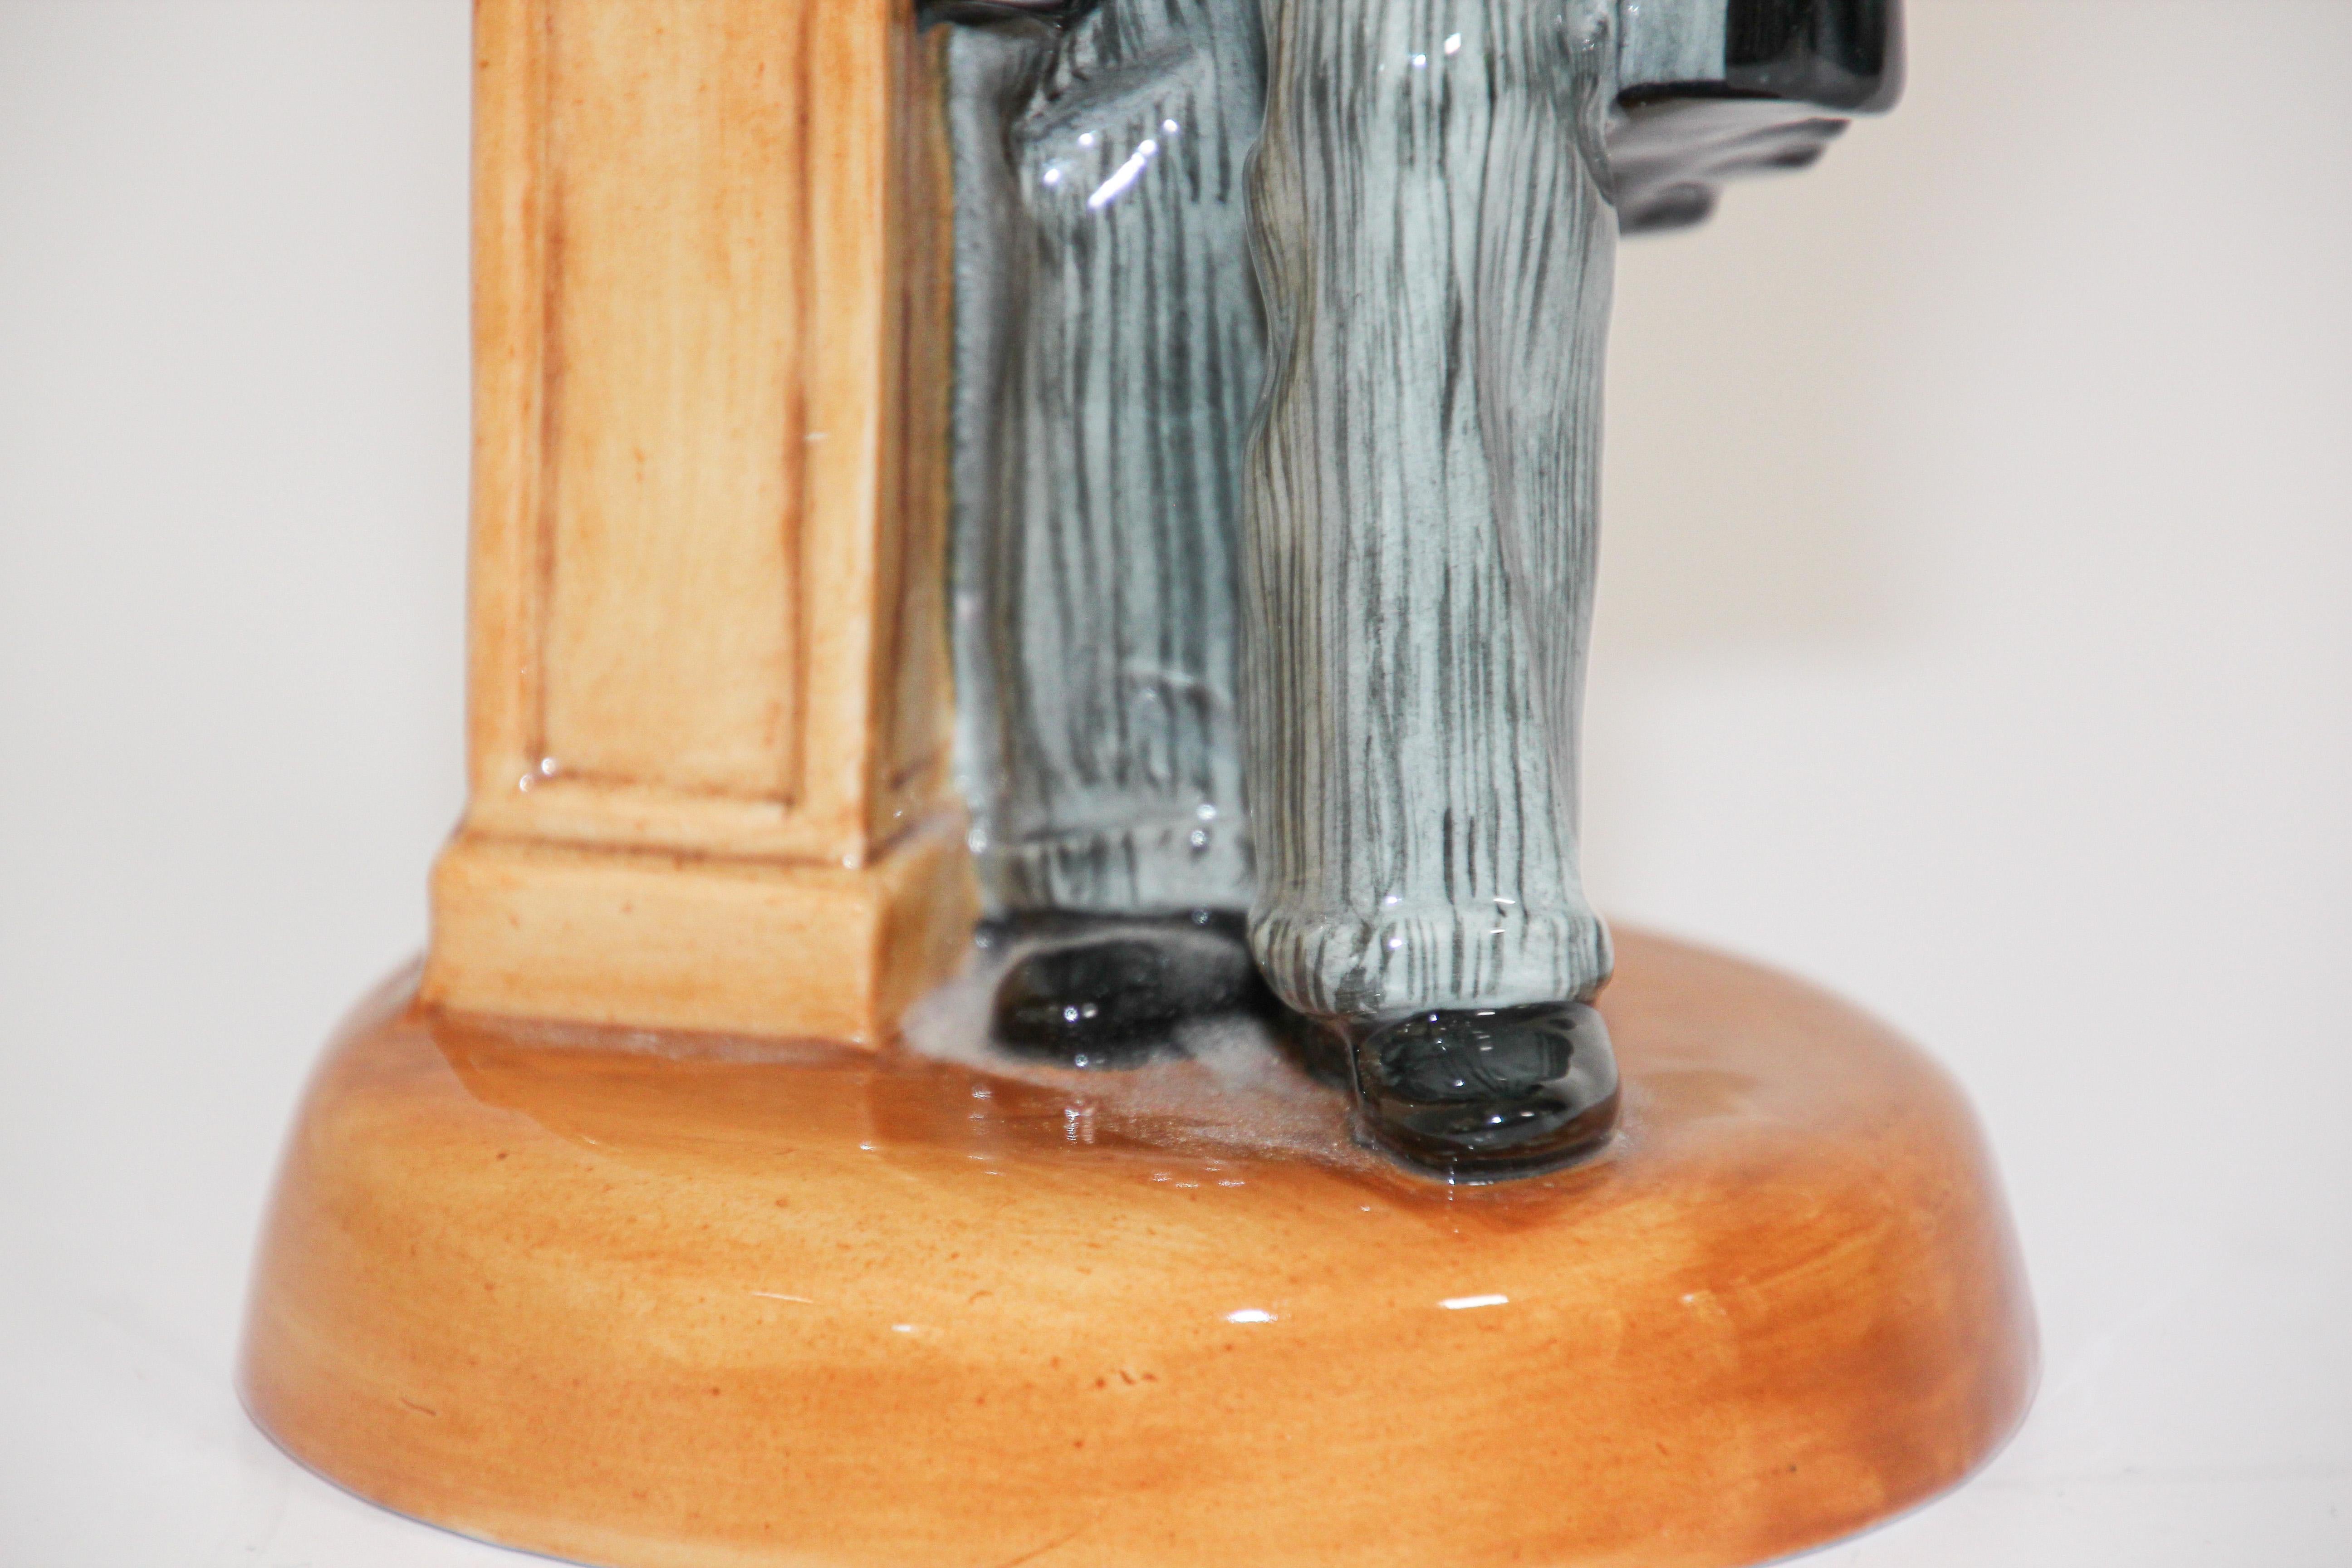 lladro lawyer figurine